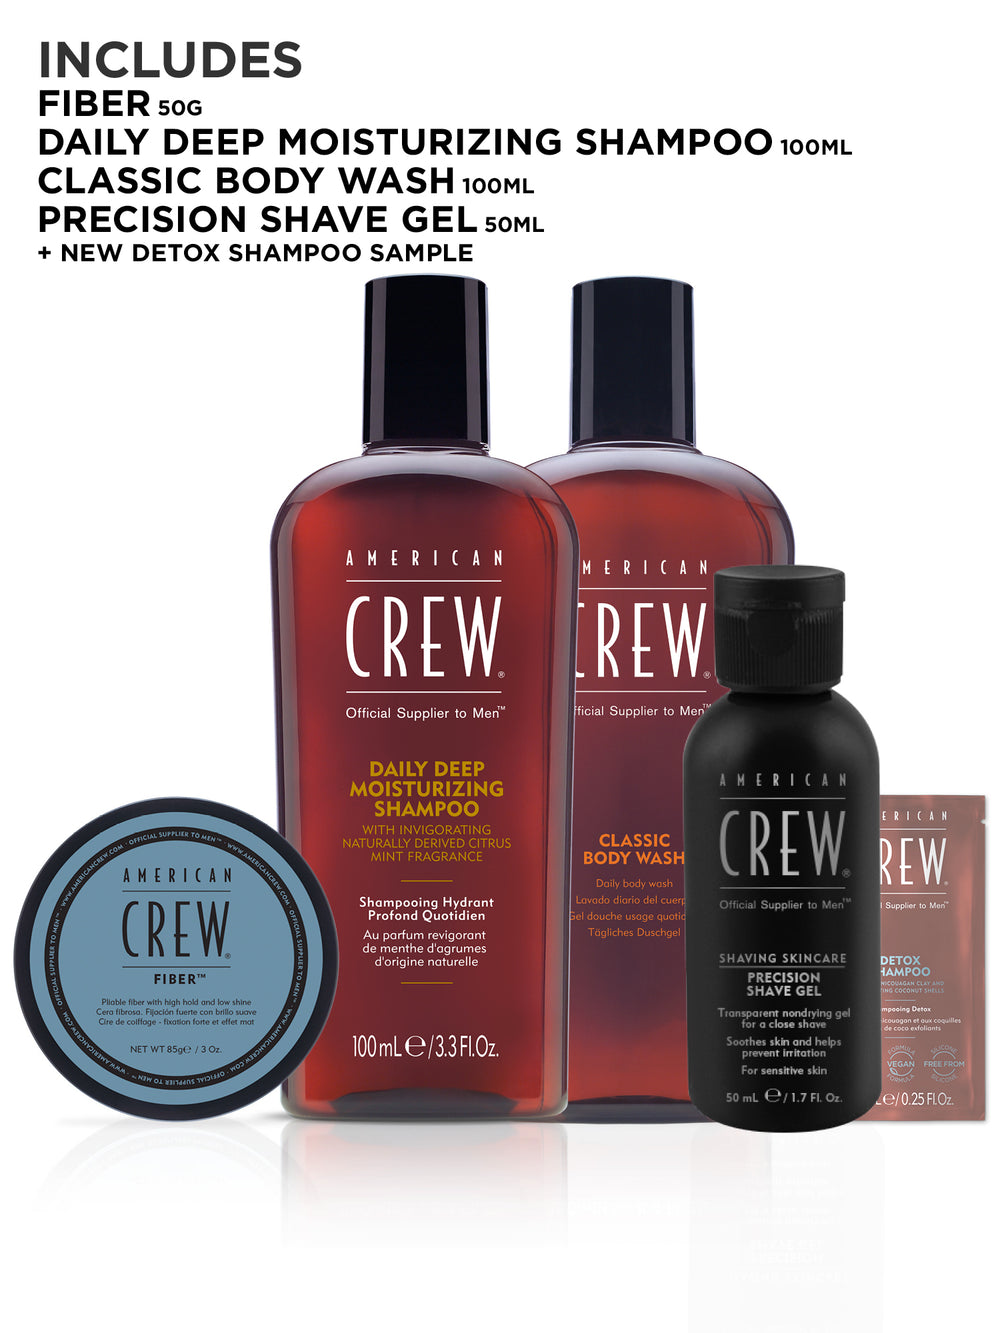 Includes fiber, daily deep moisturizing shampoo, classic body wash, precision shave gel and detox shampoo sample